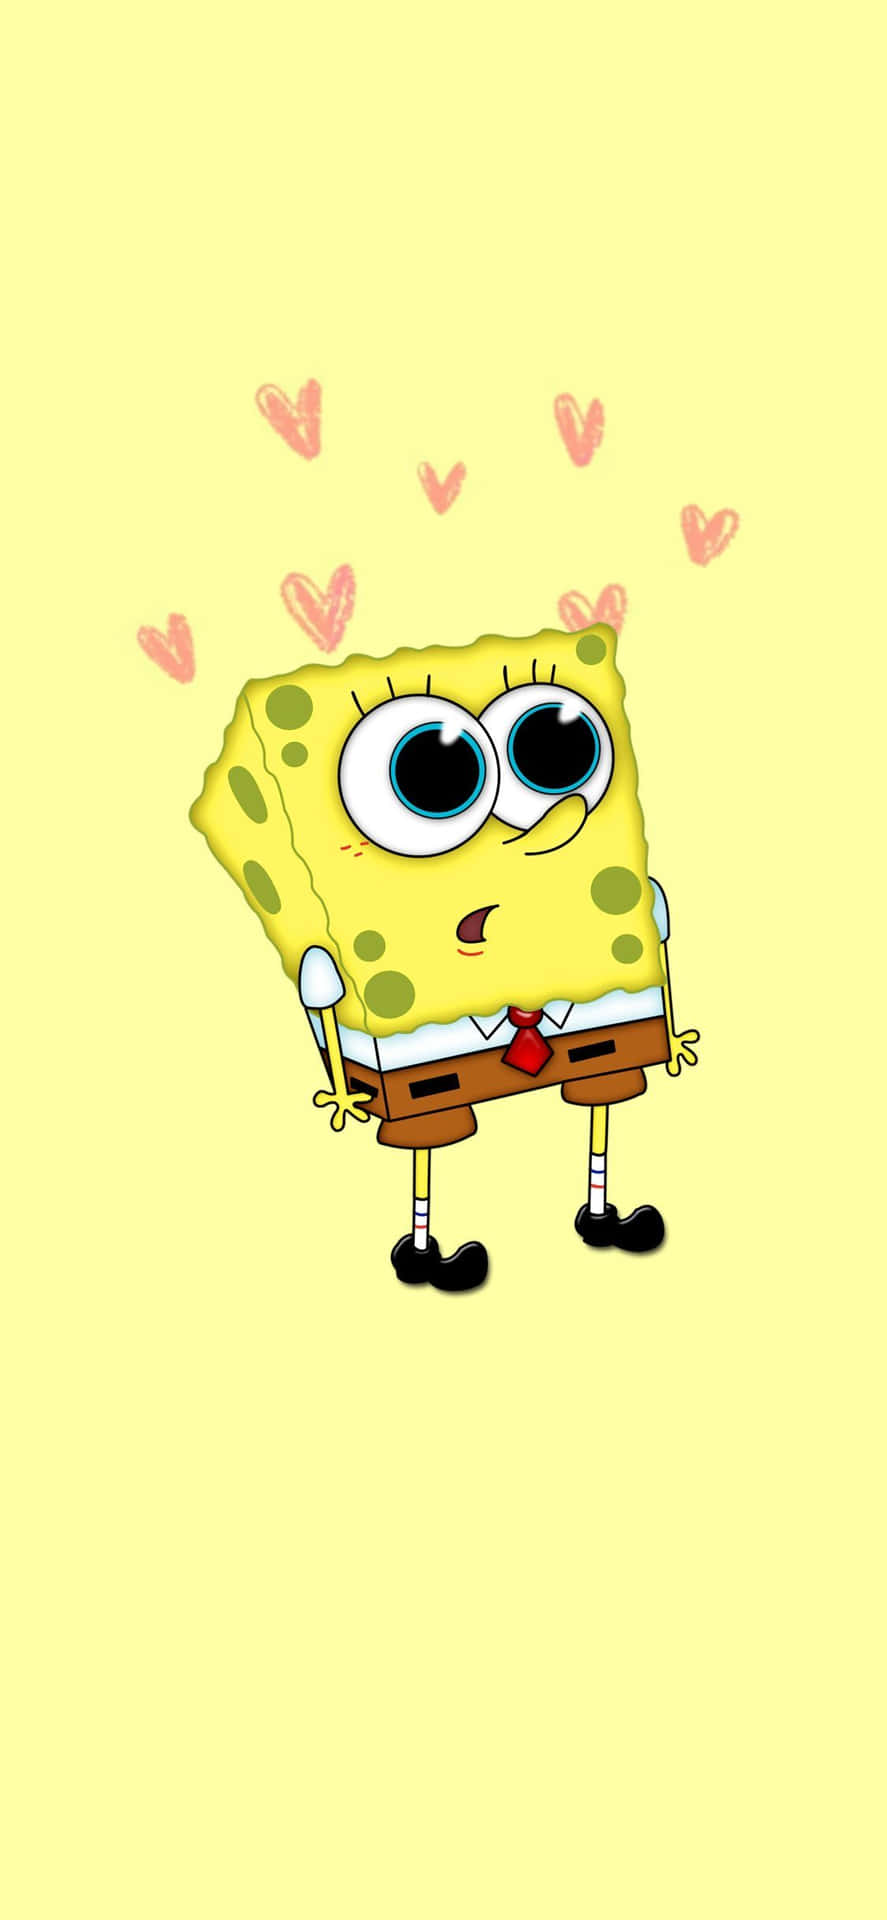 Aesthetic SpongeBob With Mini Hearts Wallpaper